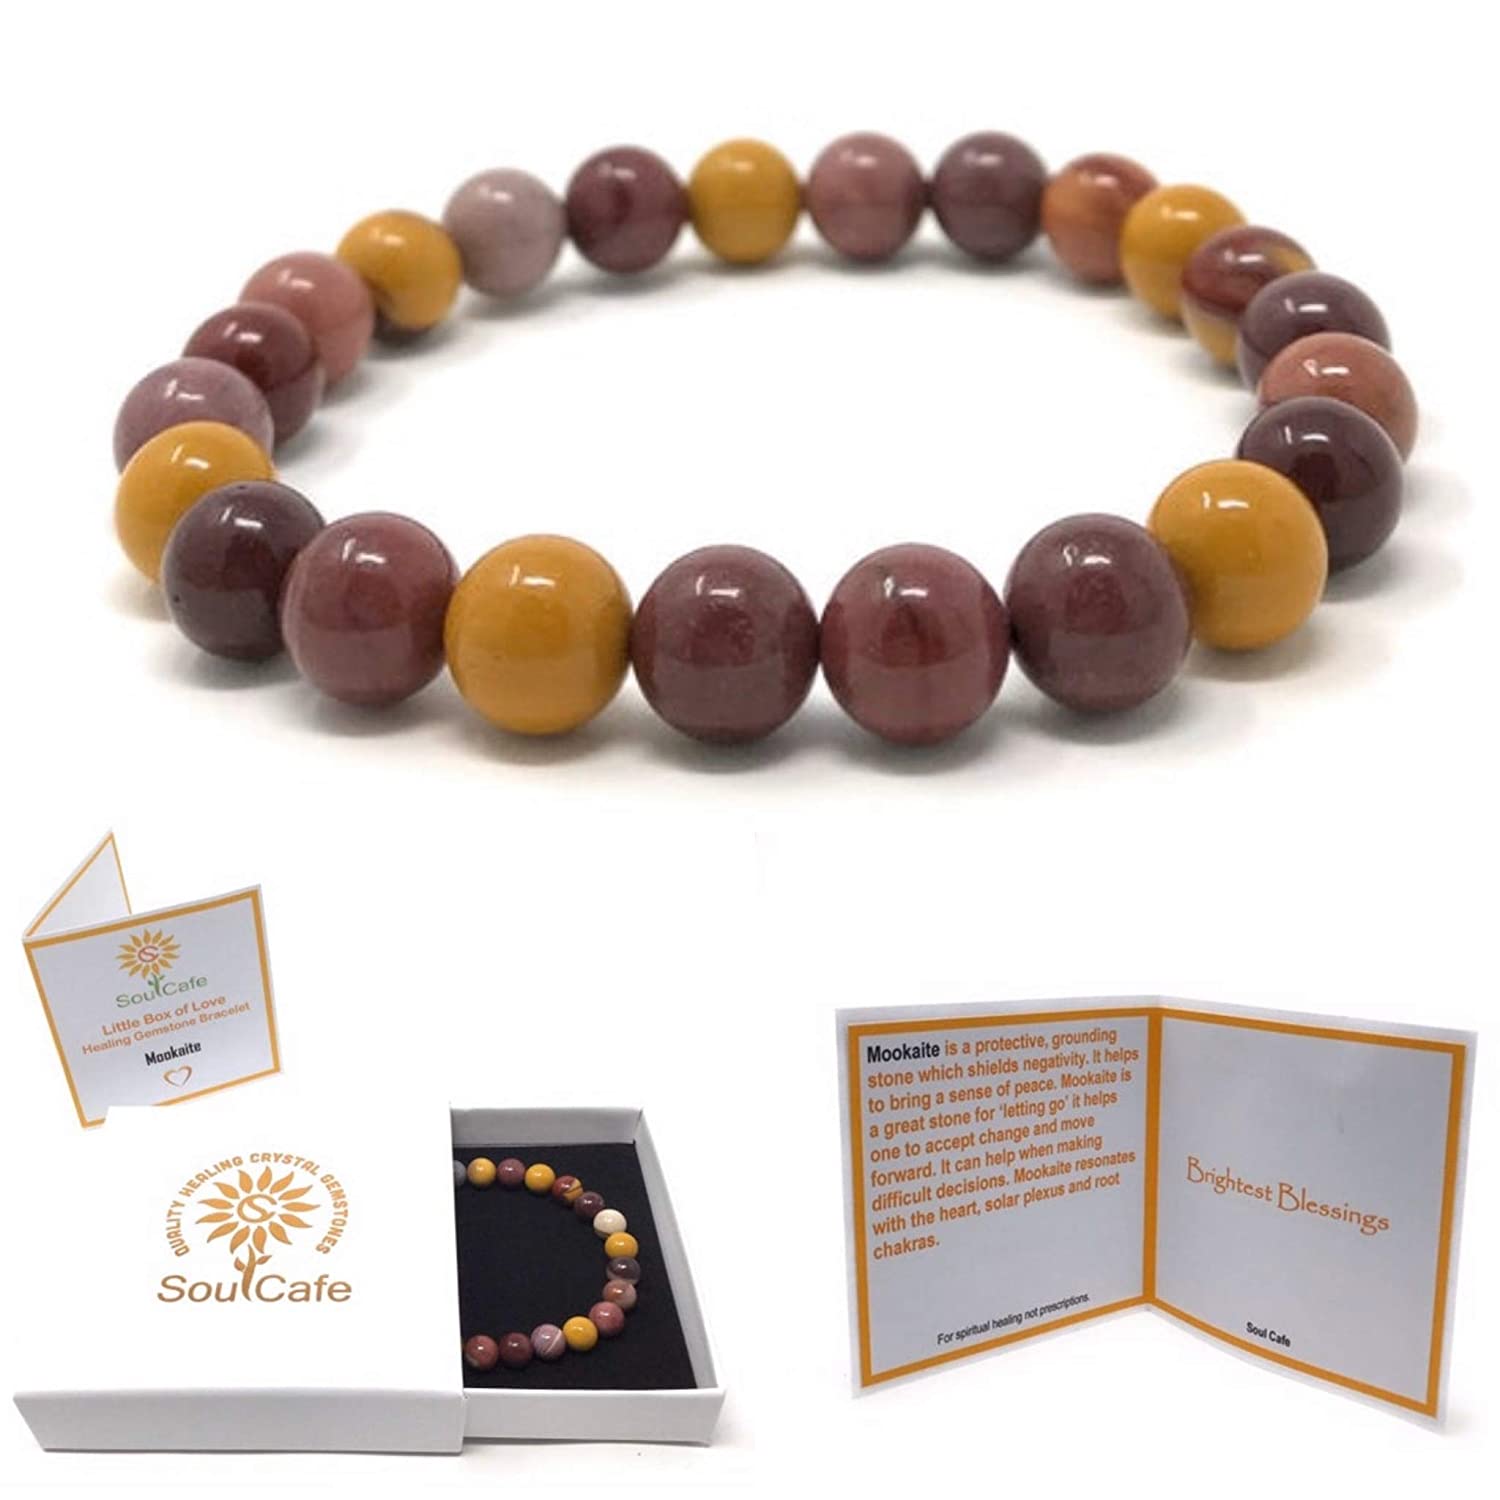 Mookaite Power Bead Crystal Bracelet - Healing Crystal Gemstone Bracelet - Soul Cafe Gift Box and Information Tag